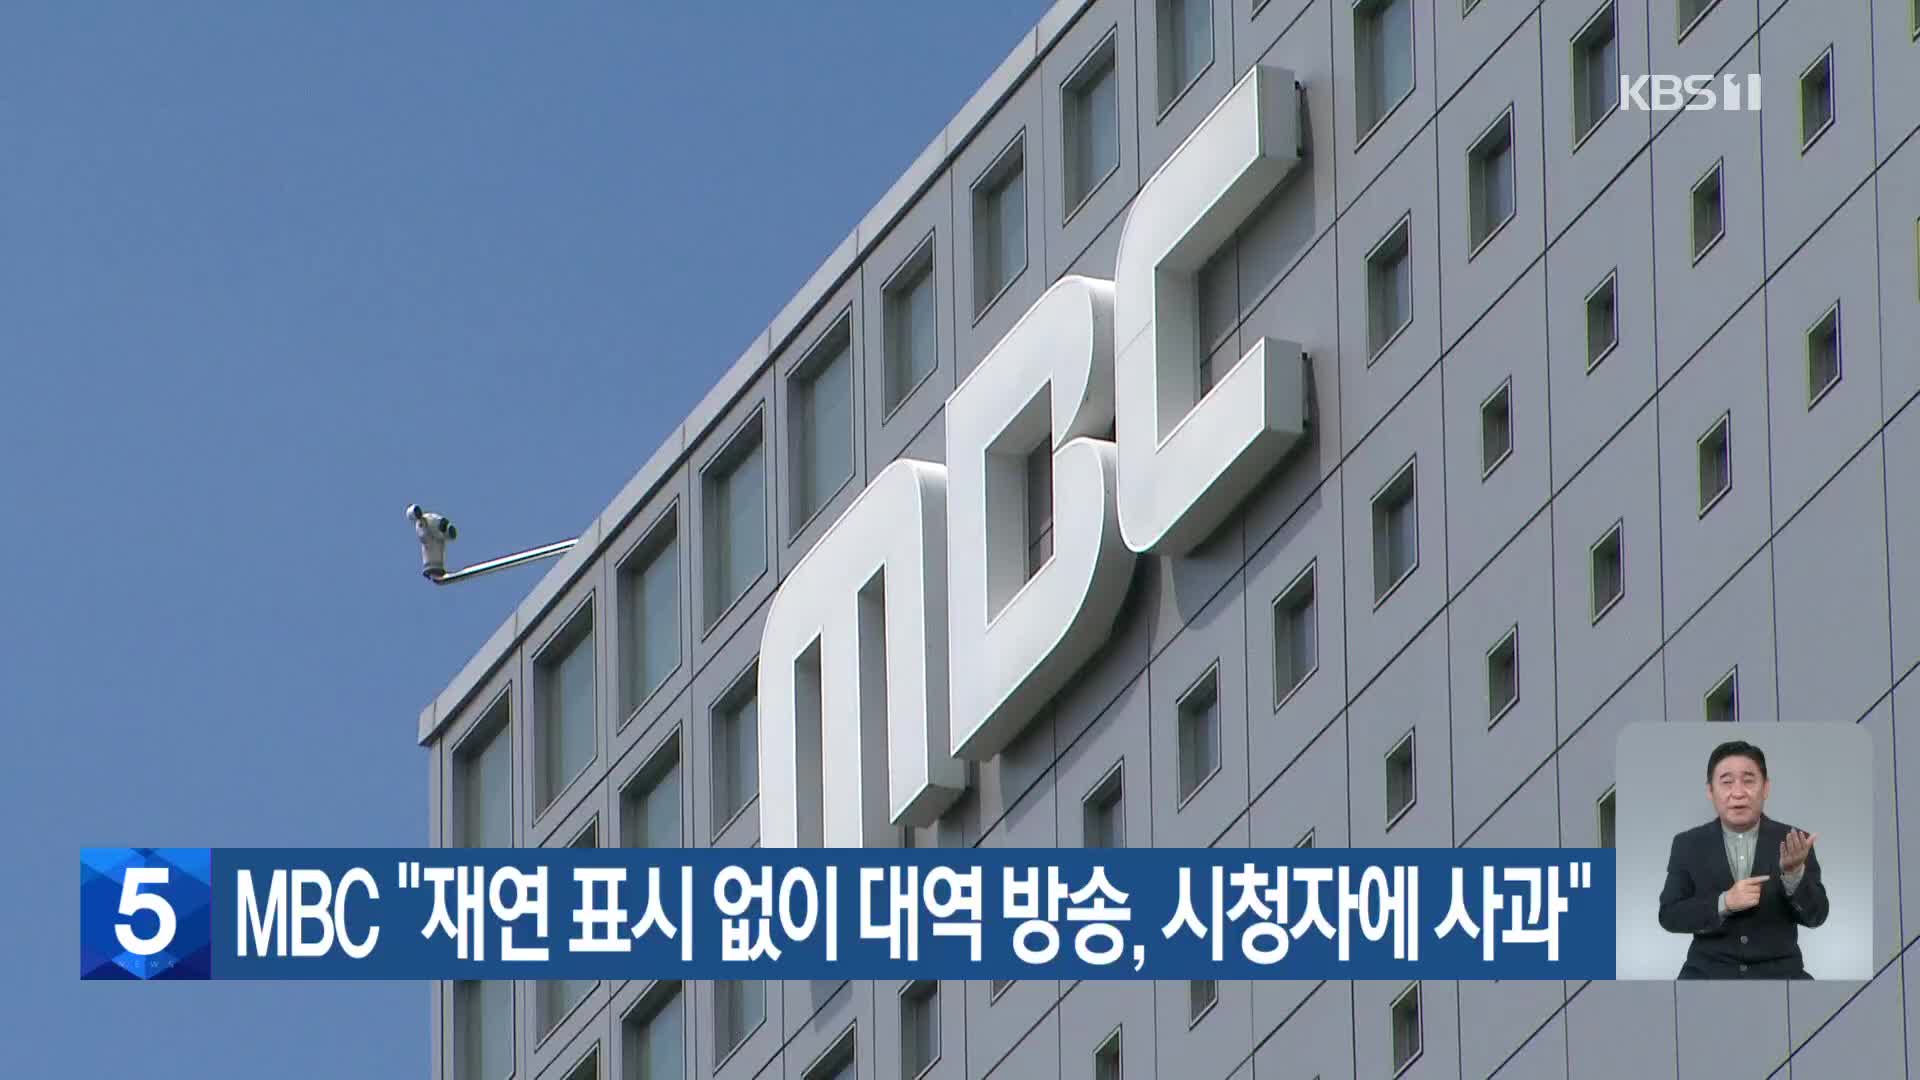 MBC “재연 표시 없이 대역 방송, 시청자에 사과”